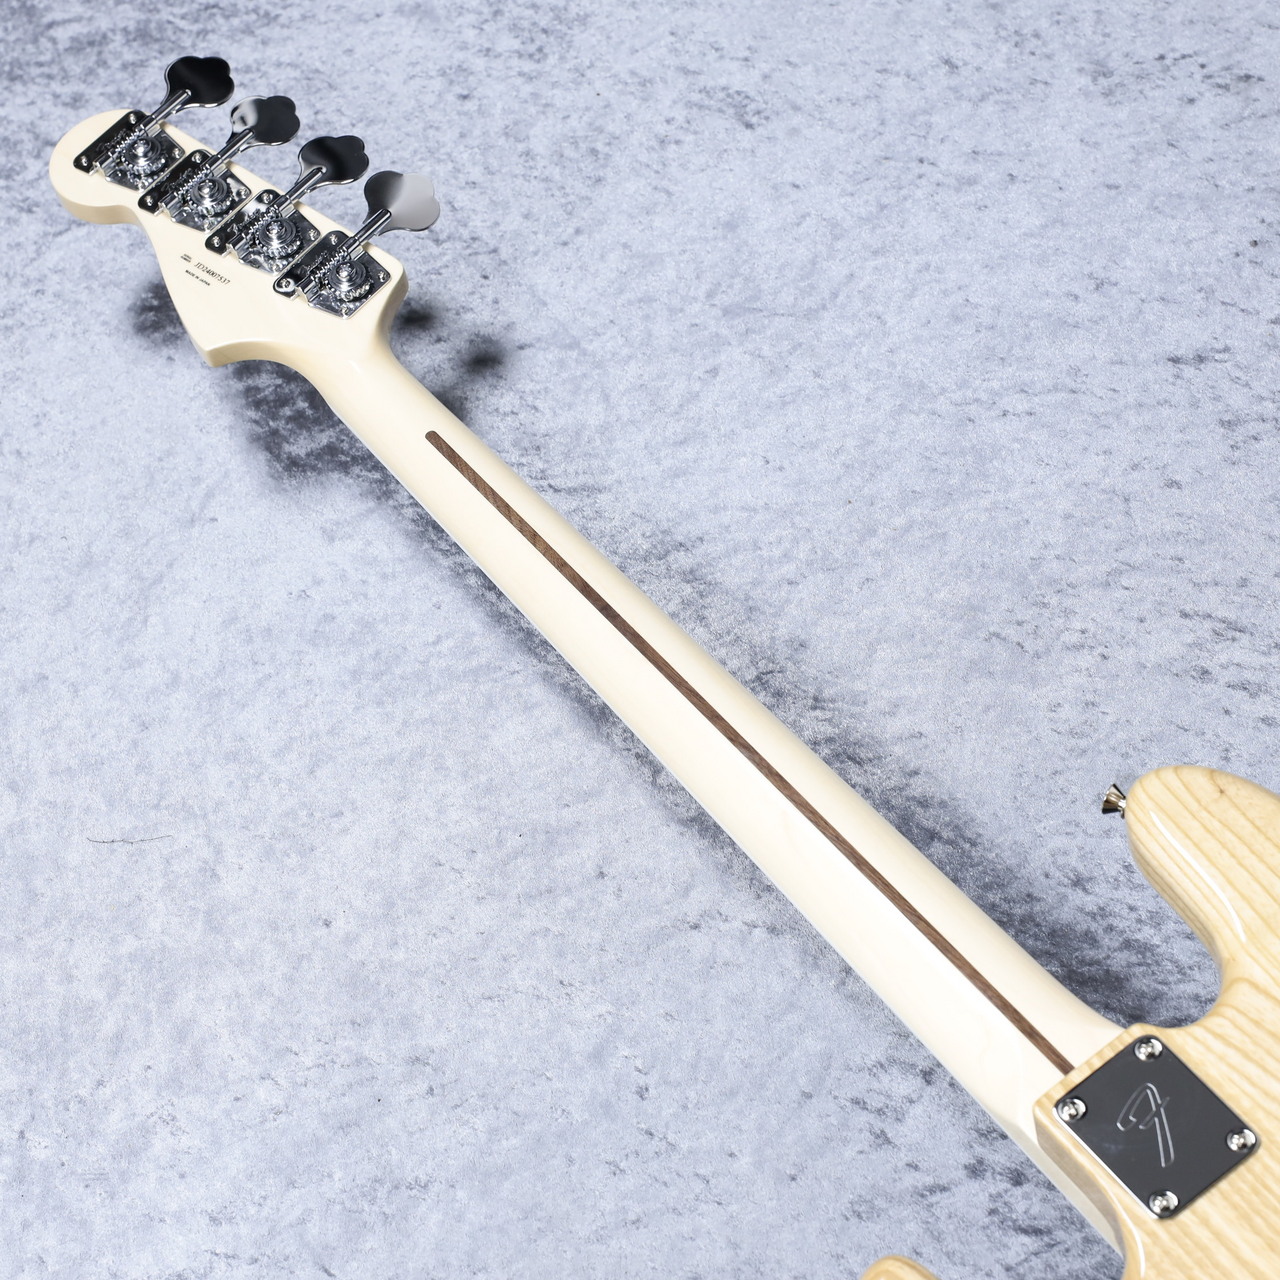 Fender Made in Japan Heritage 70s Jazz Bass - Natural - 【4.89kg 